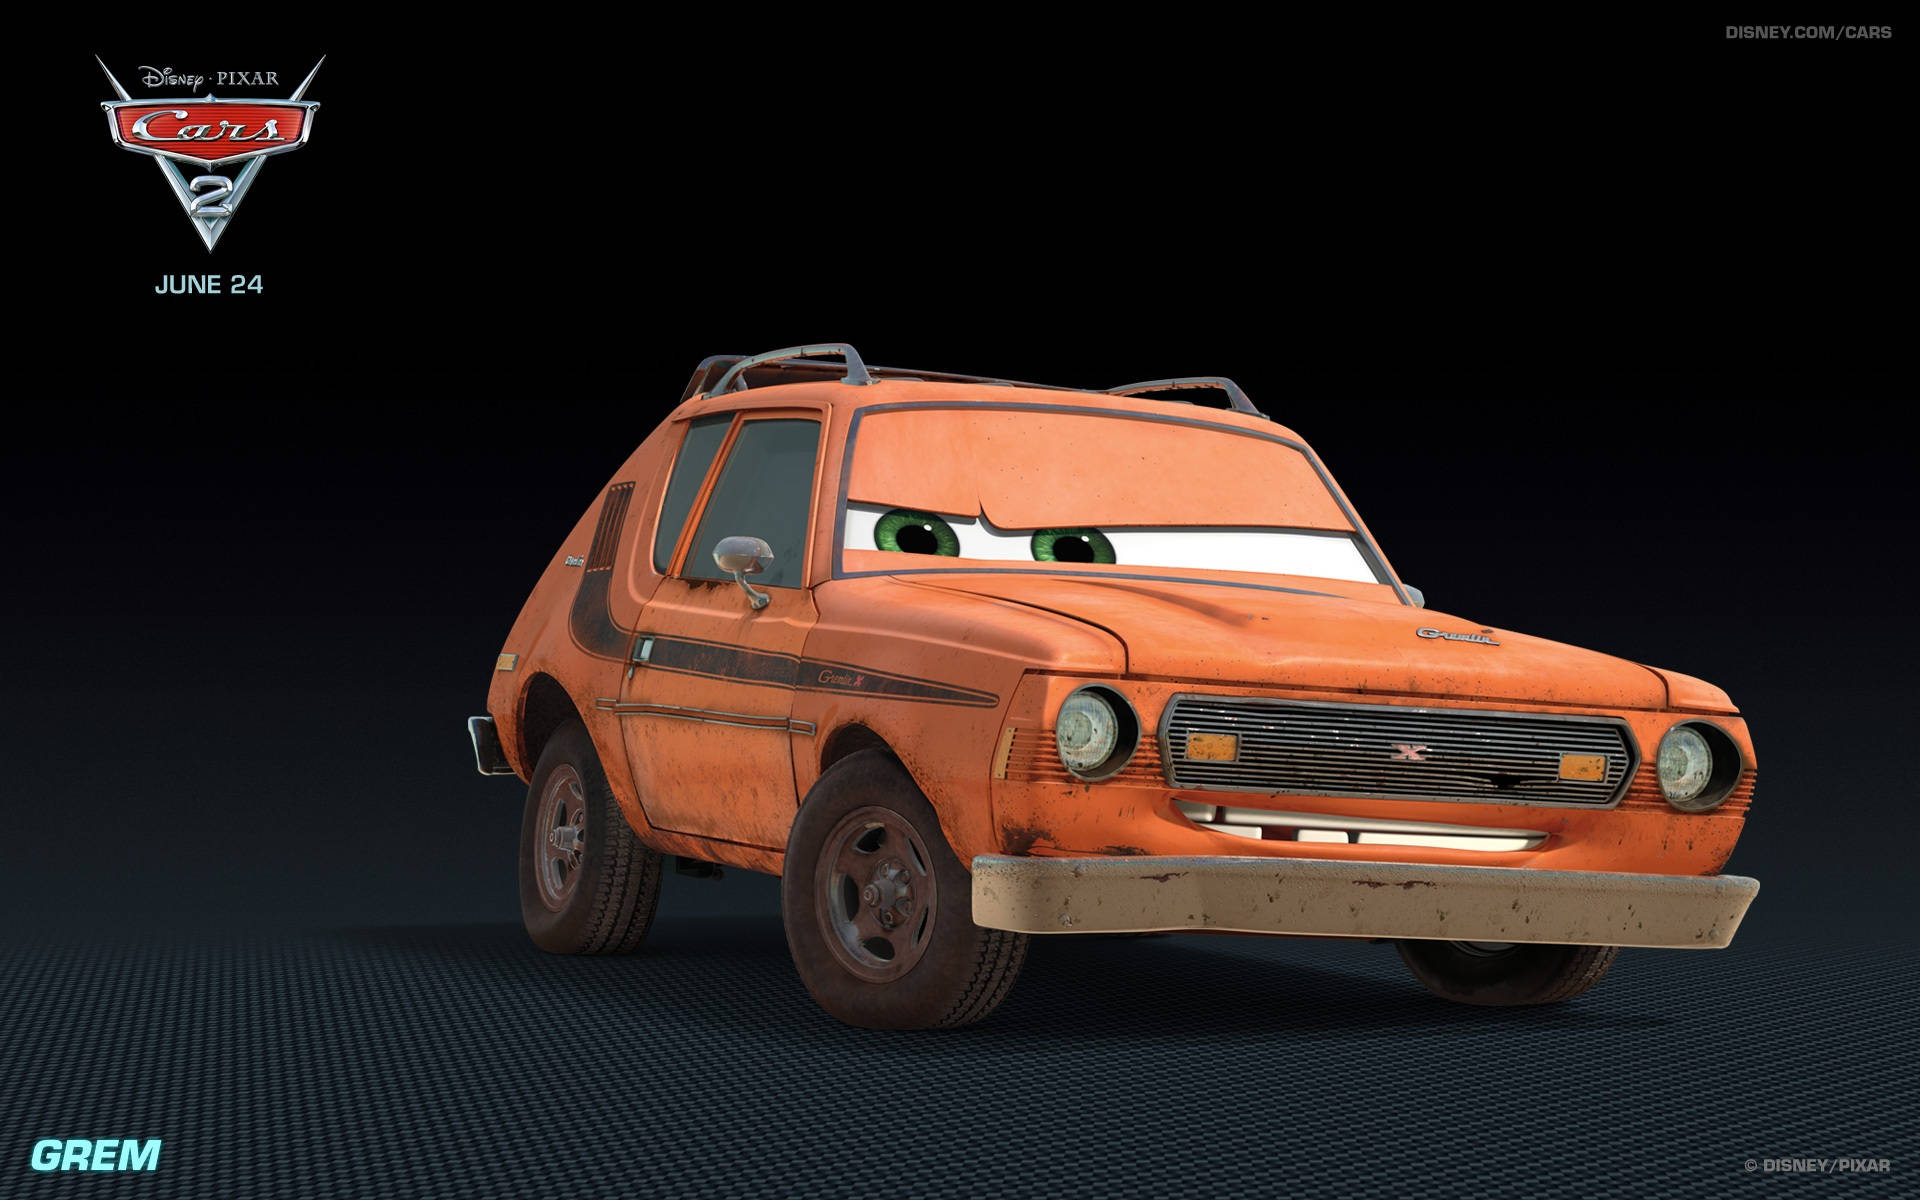 Grem From Disney Pixar's Cars 2 Background